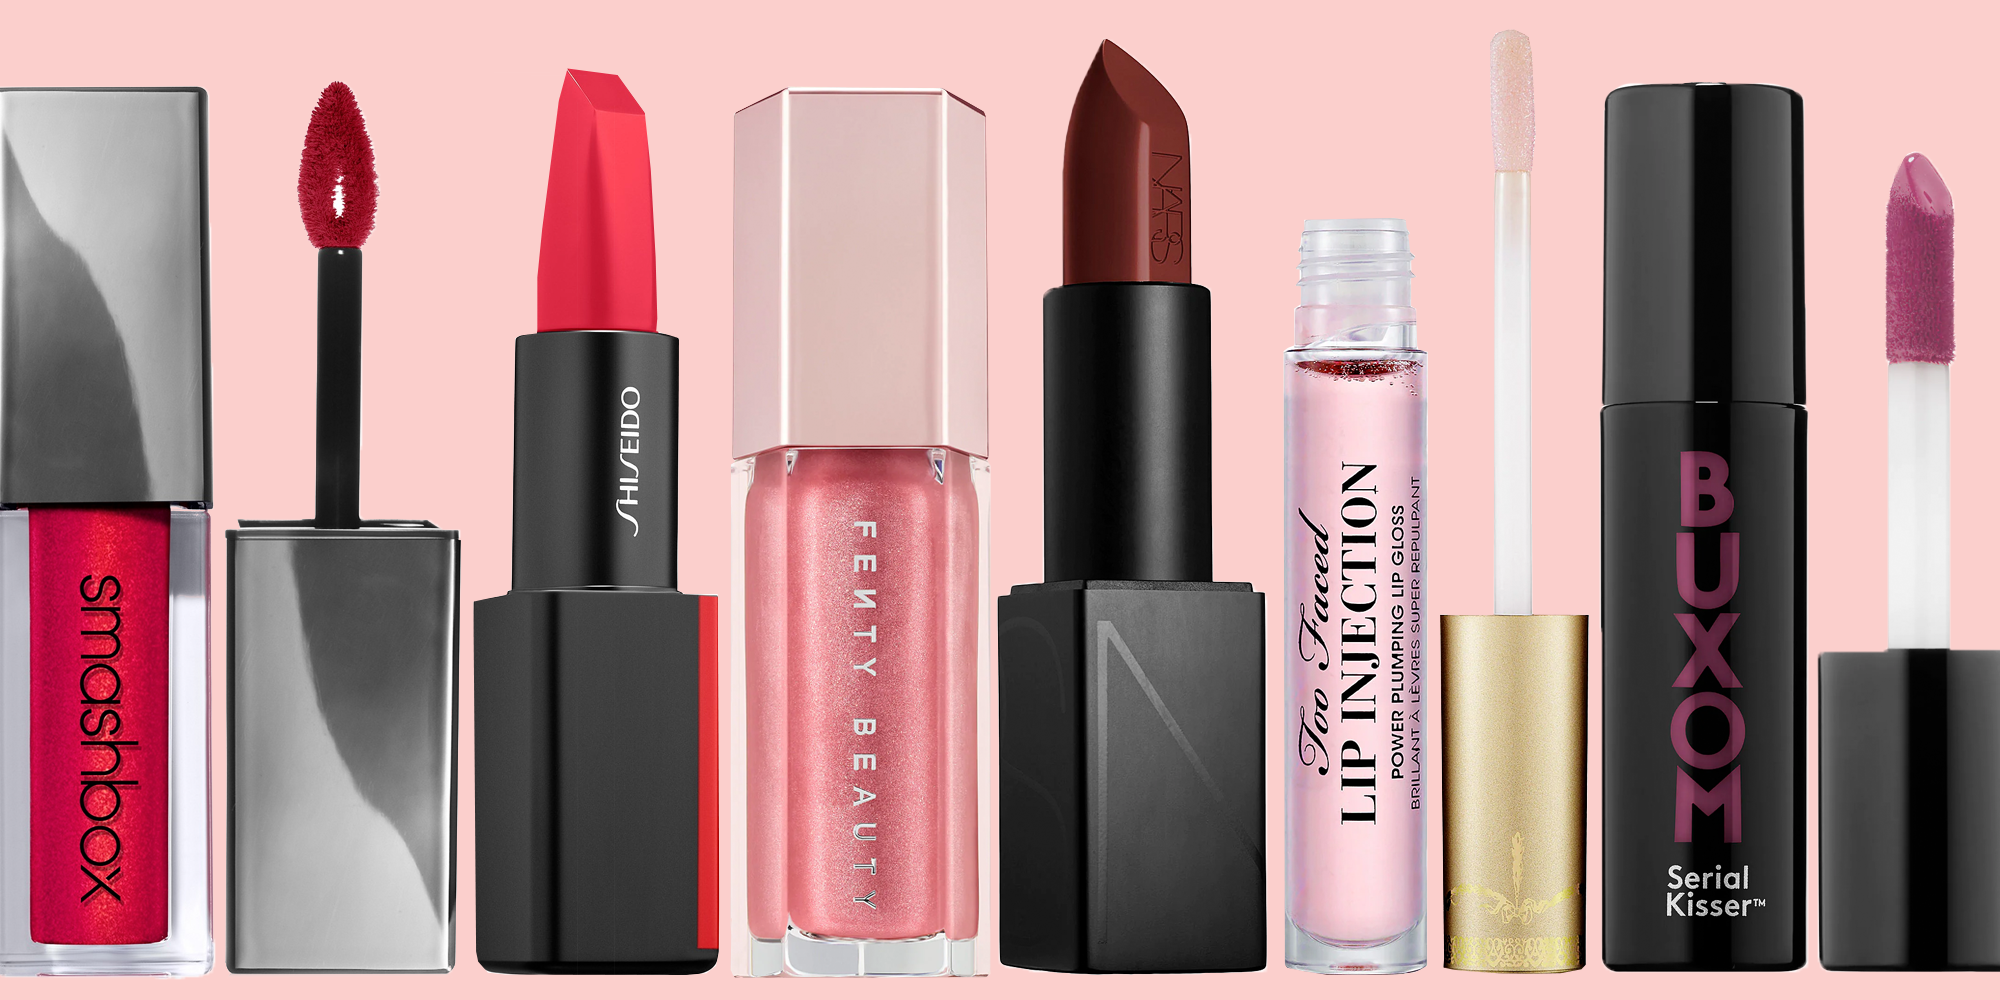 20 Best Fall Lipstick Colors for 2019 - Autumn Lip Colors